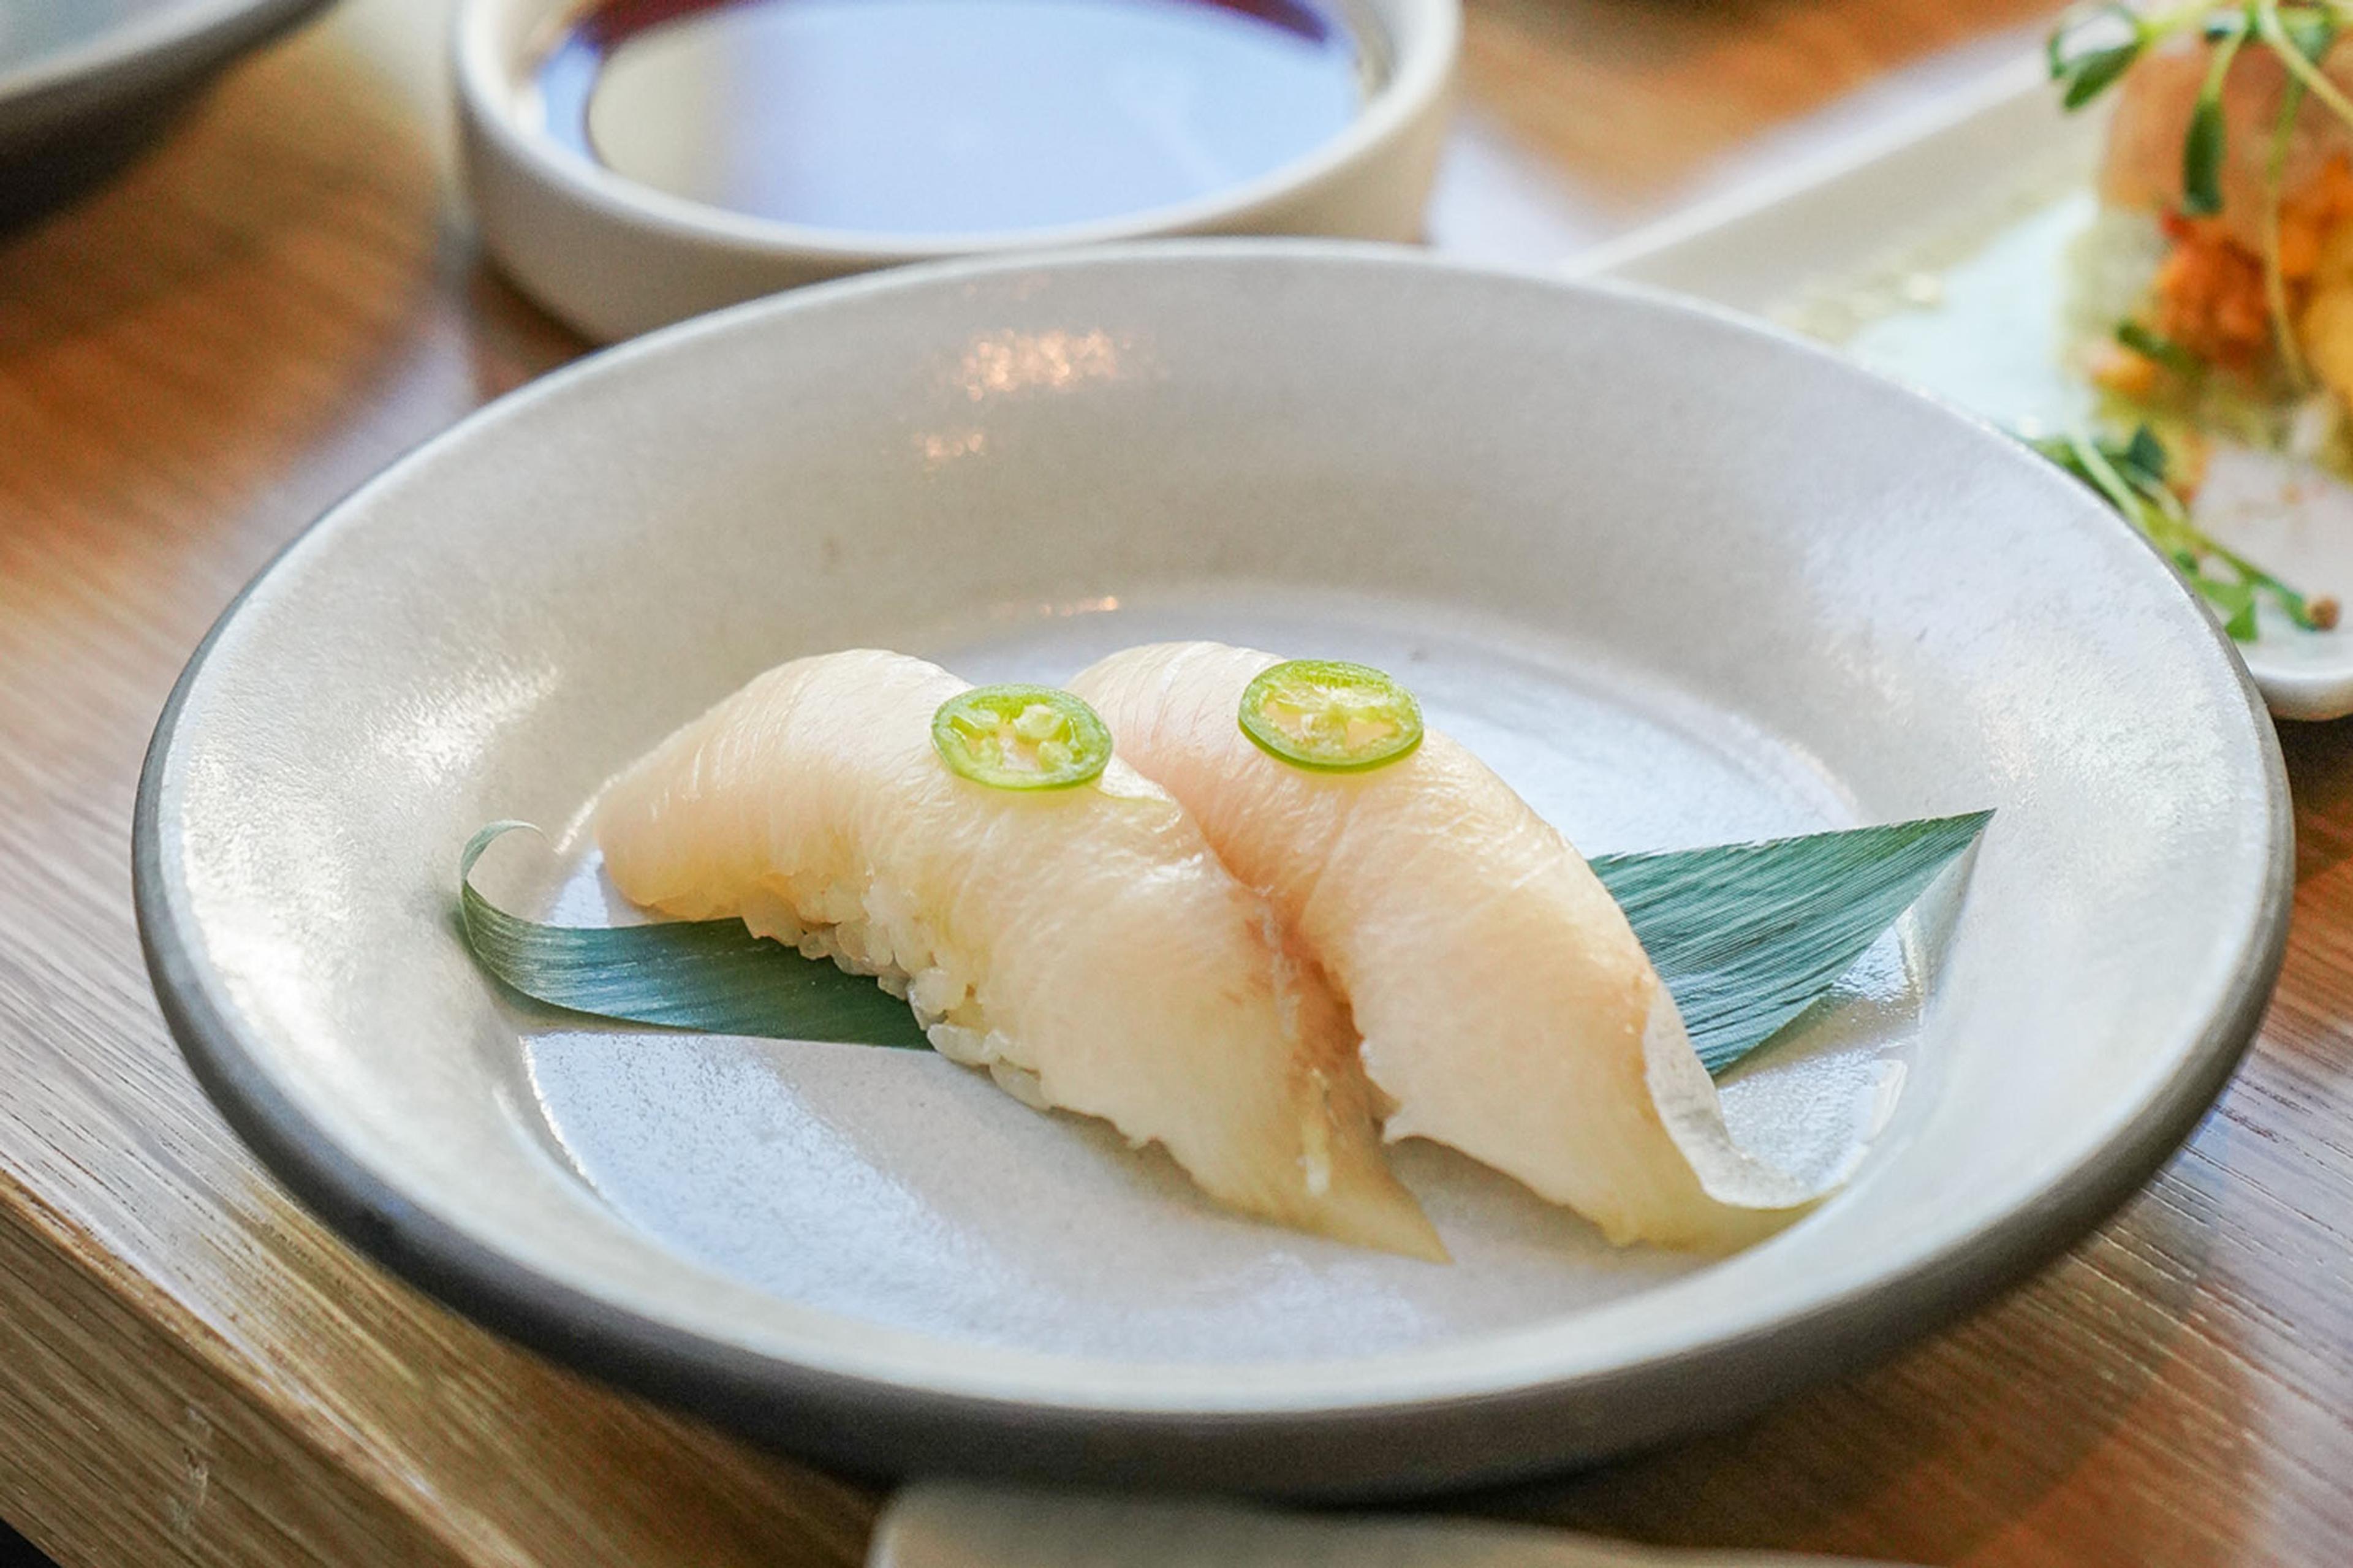 Hamachi nigiri in a dish with a garnish of jalapeno.